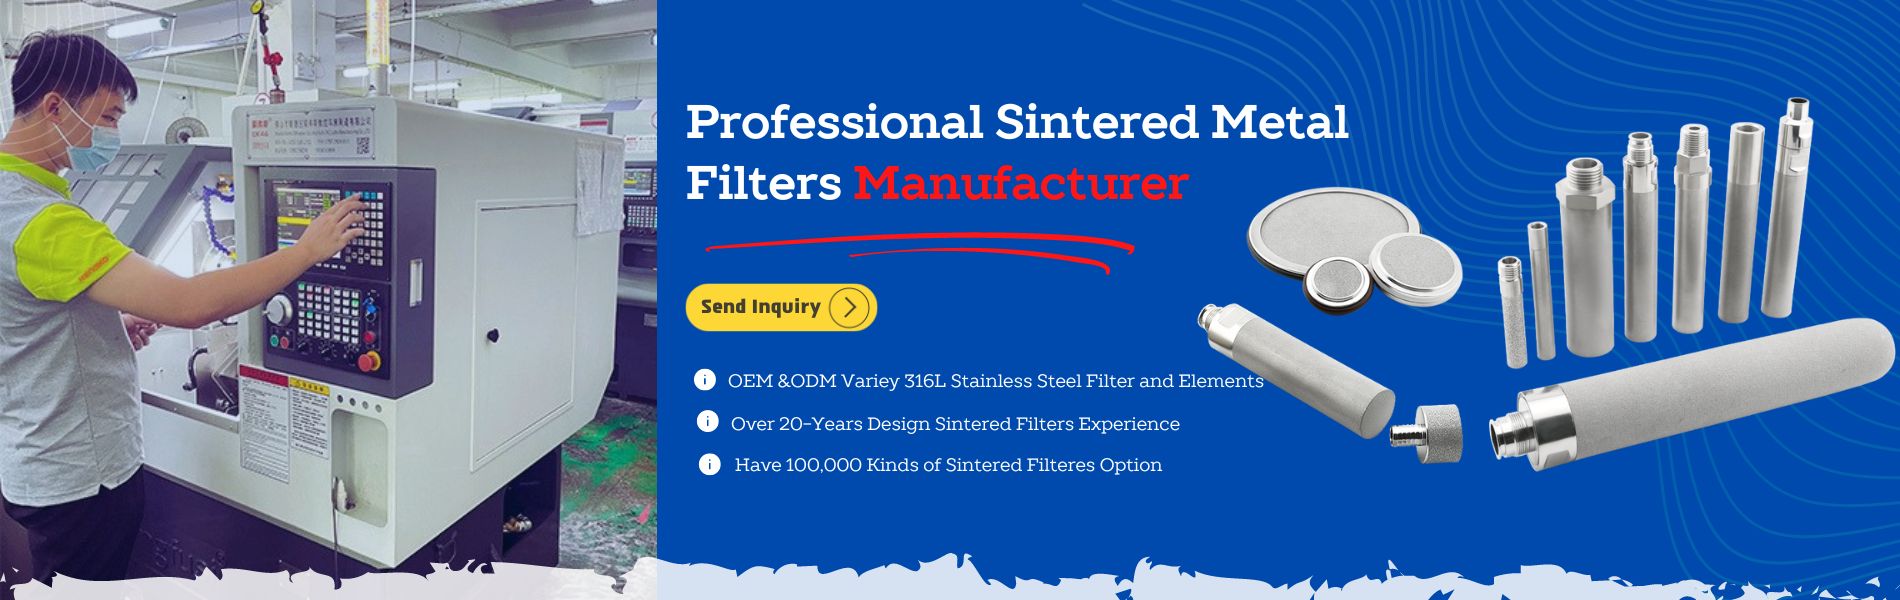 Professional Sintered Metal Filters wopanga